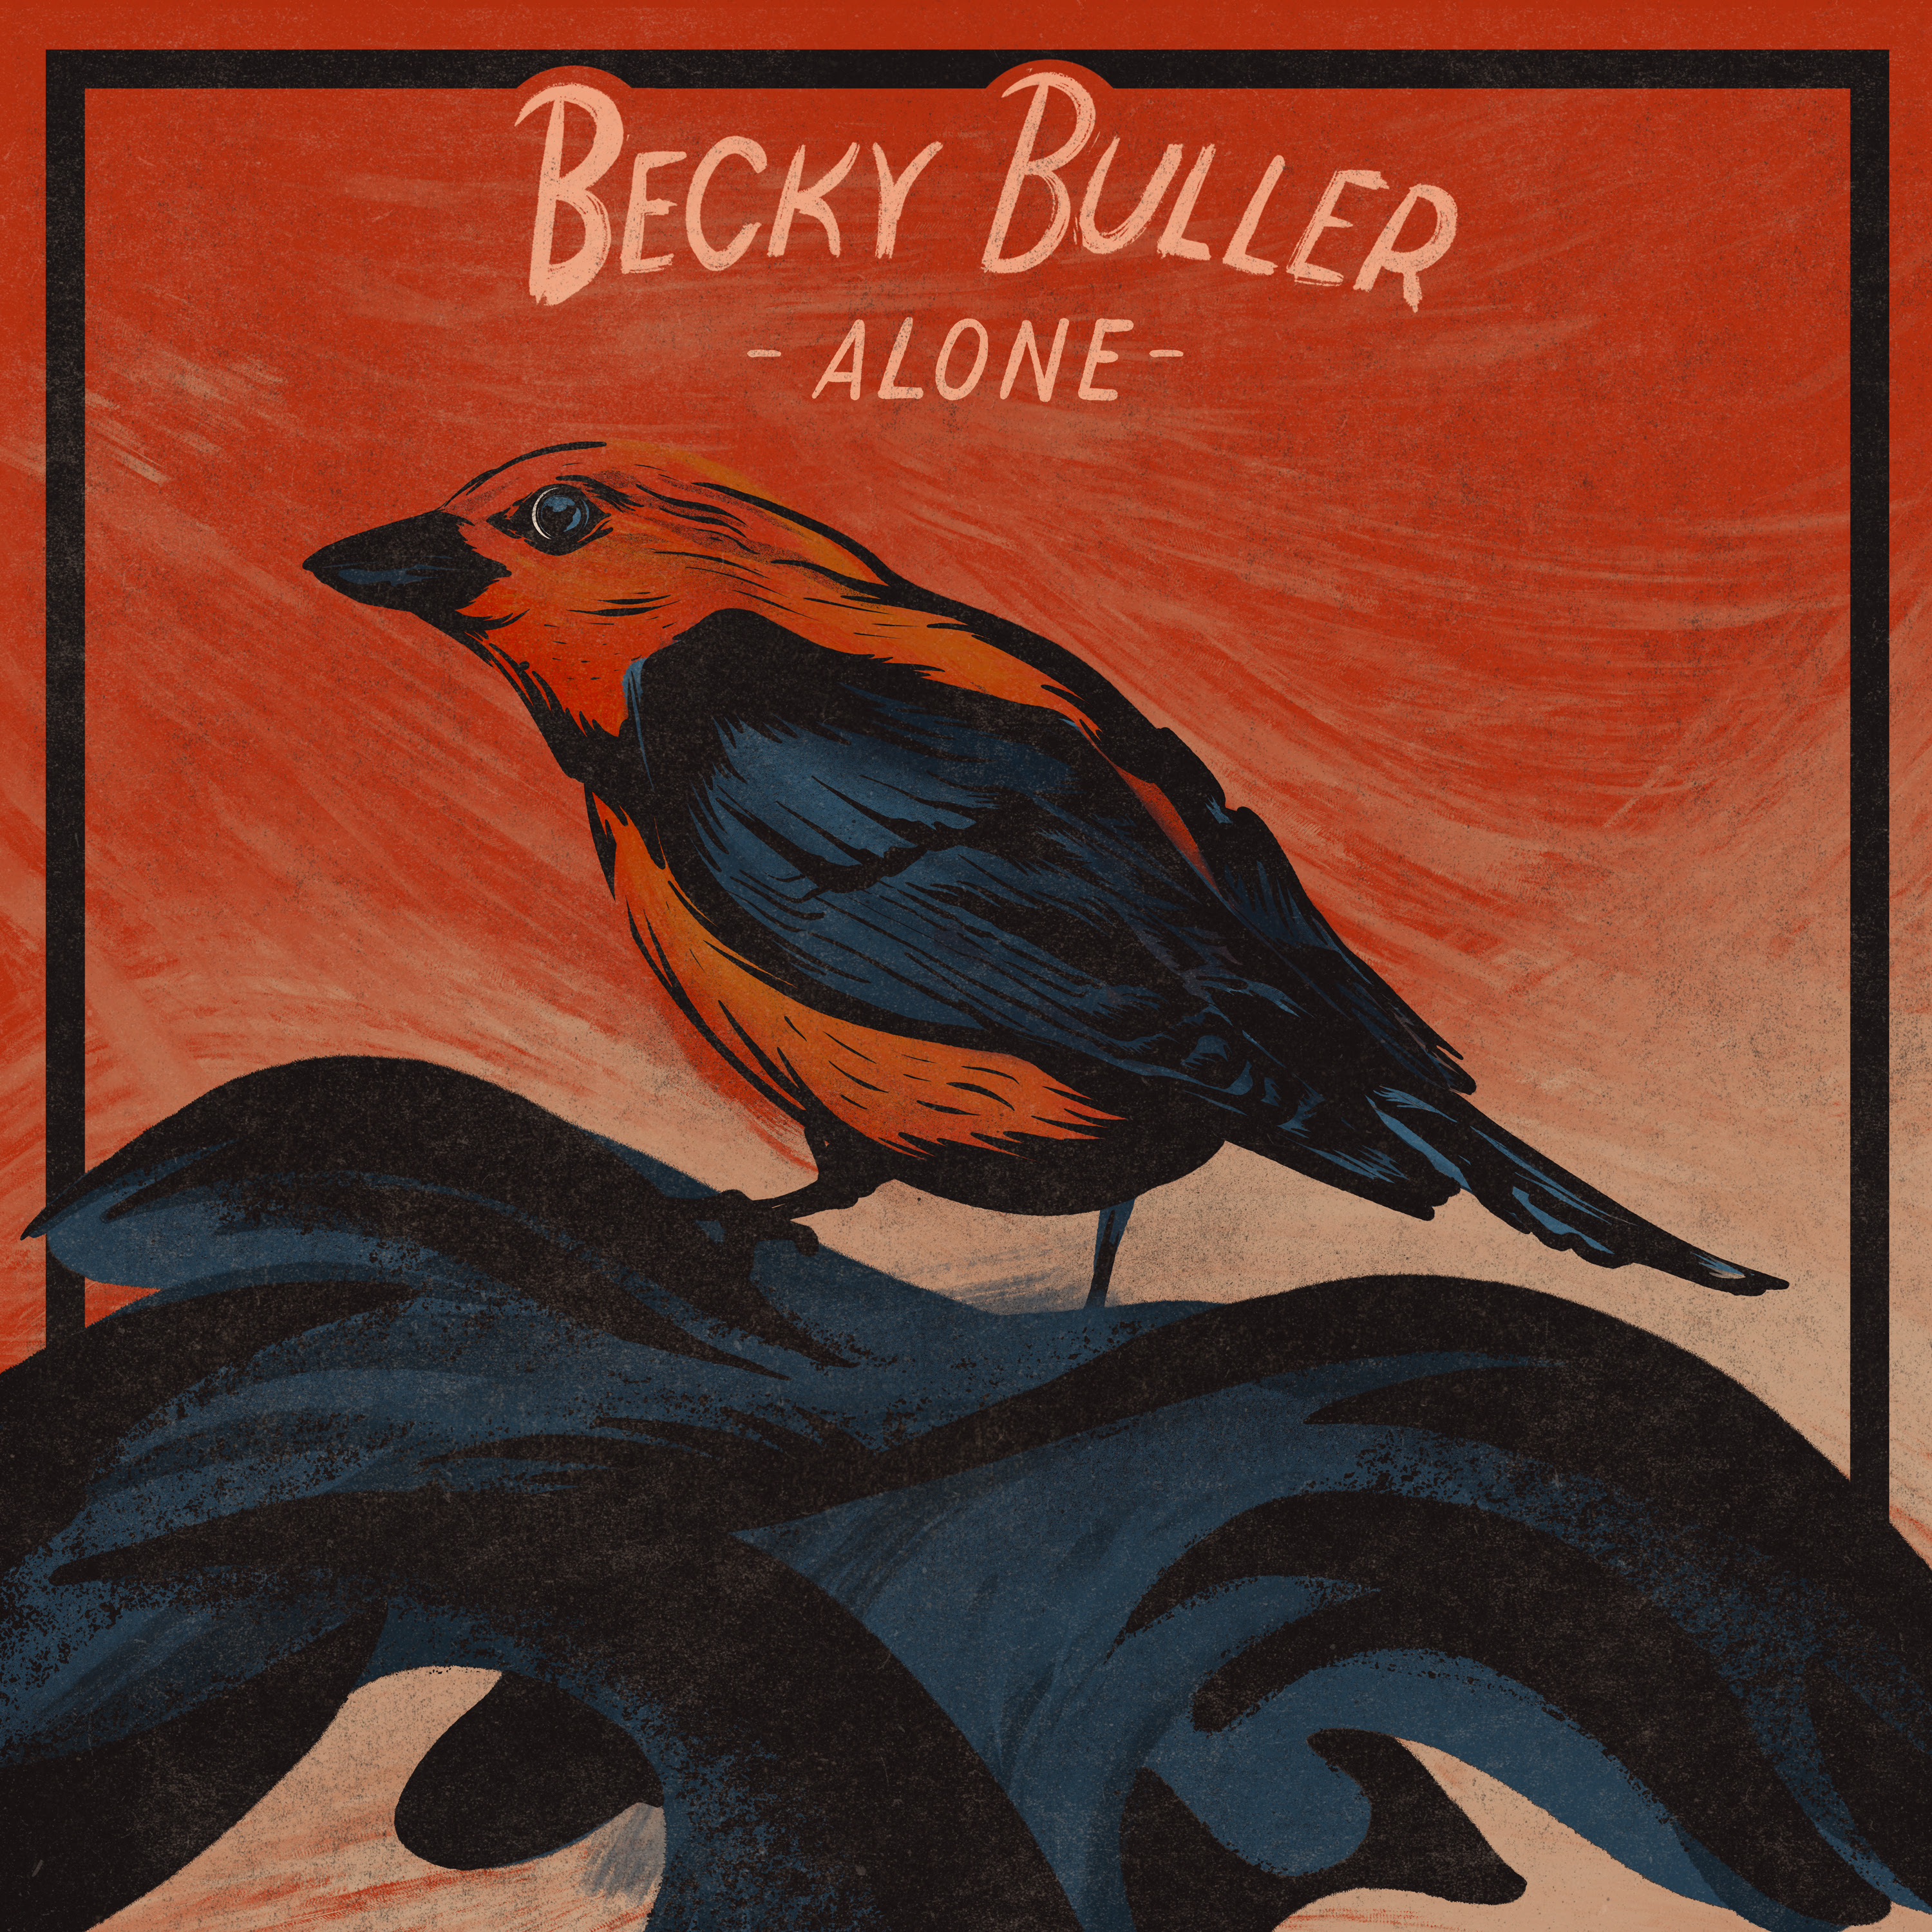 Becky Buller releases new single “Alone”